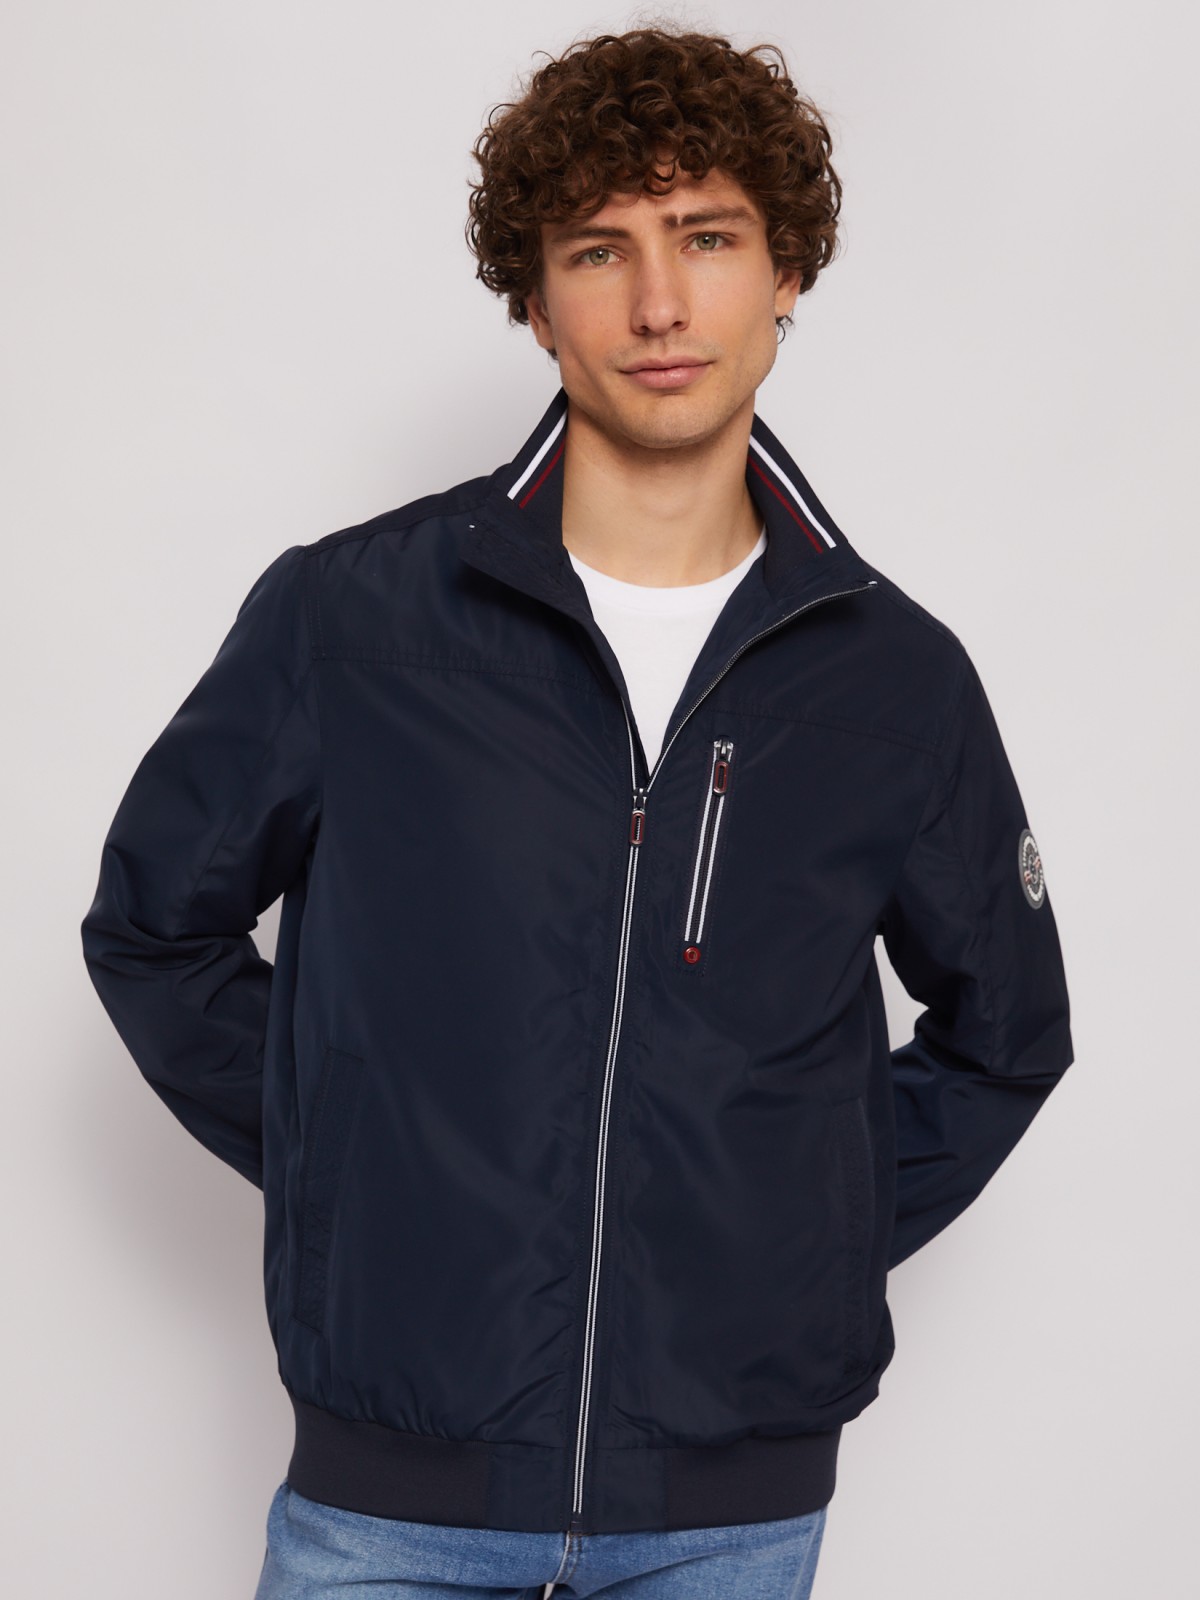 Куртка-бомбер на молнии с воротником-стойкой zolla 014215602024, цвет темно-синий, размер XL - фото 3